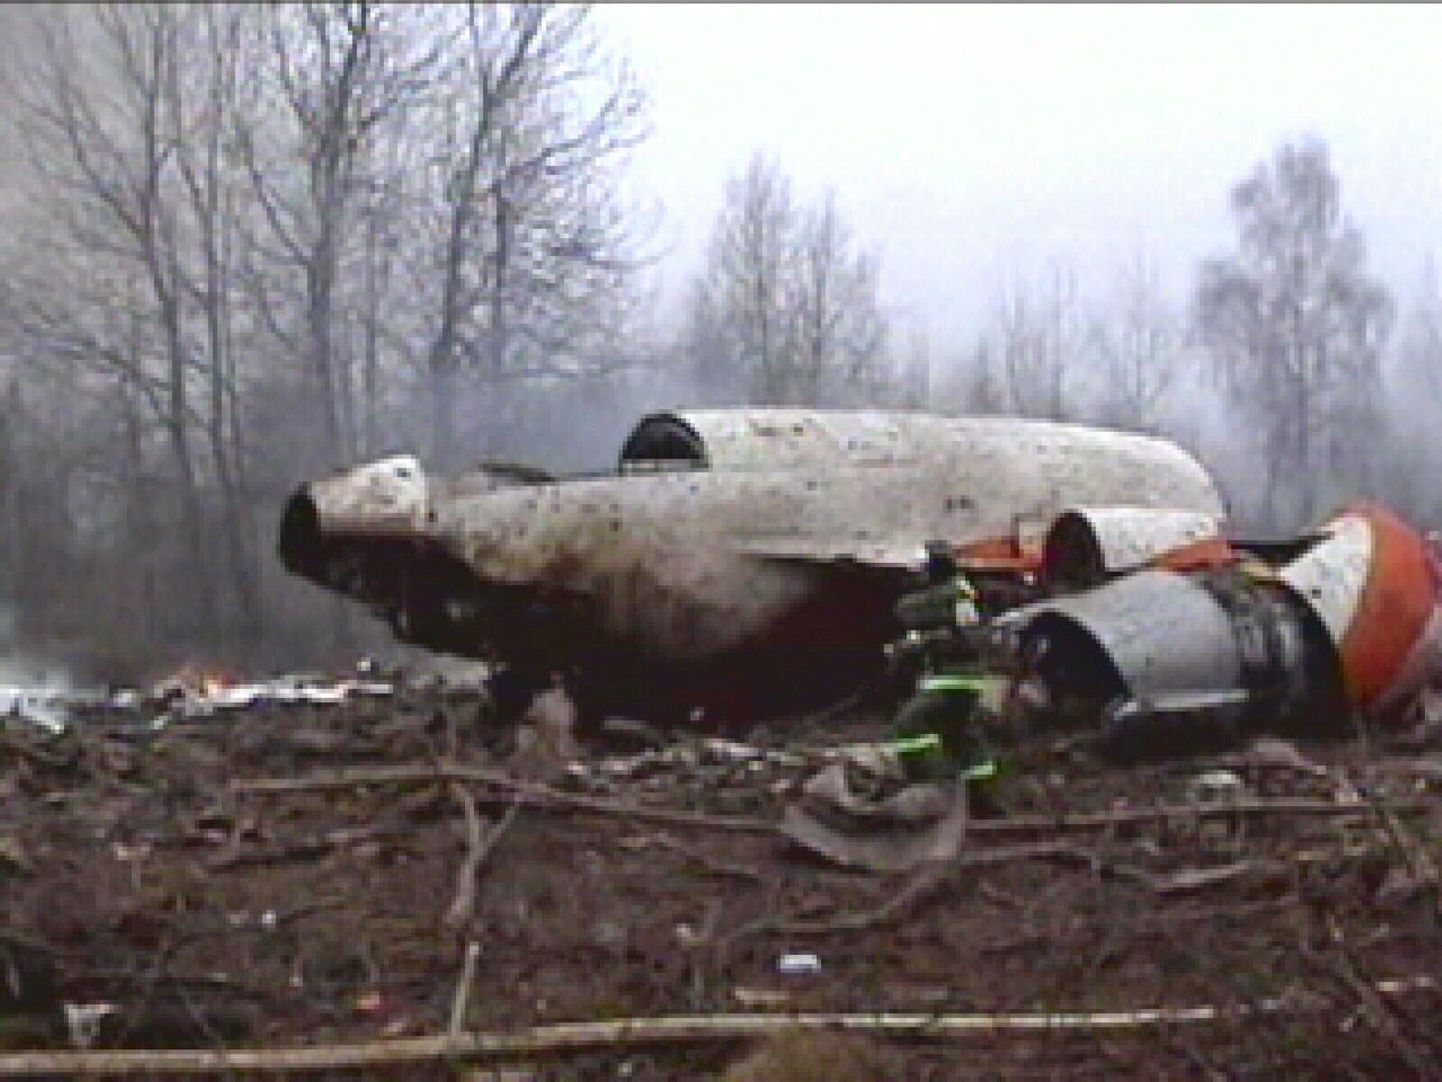 Lech Kaczynski lennuki õnnetuspaik.